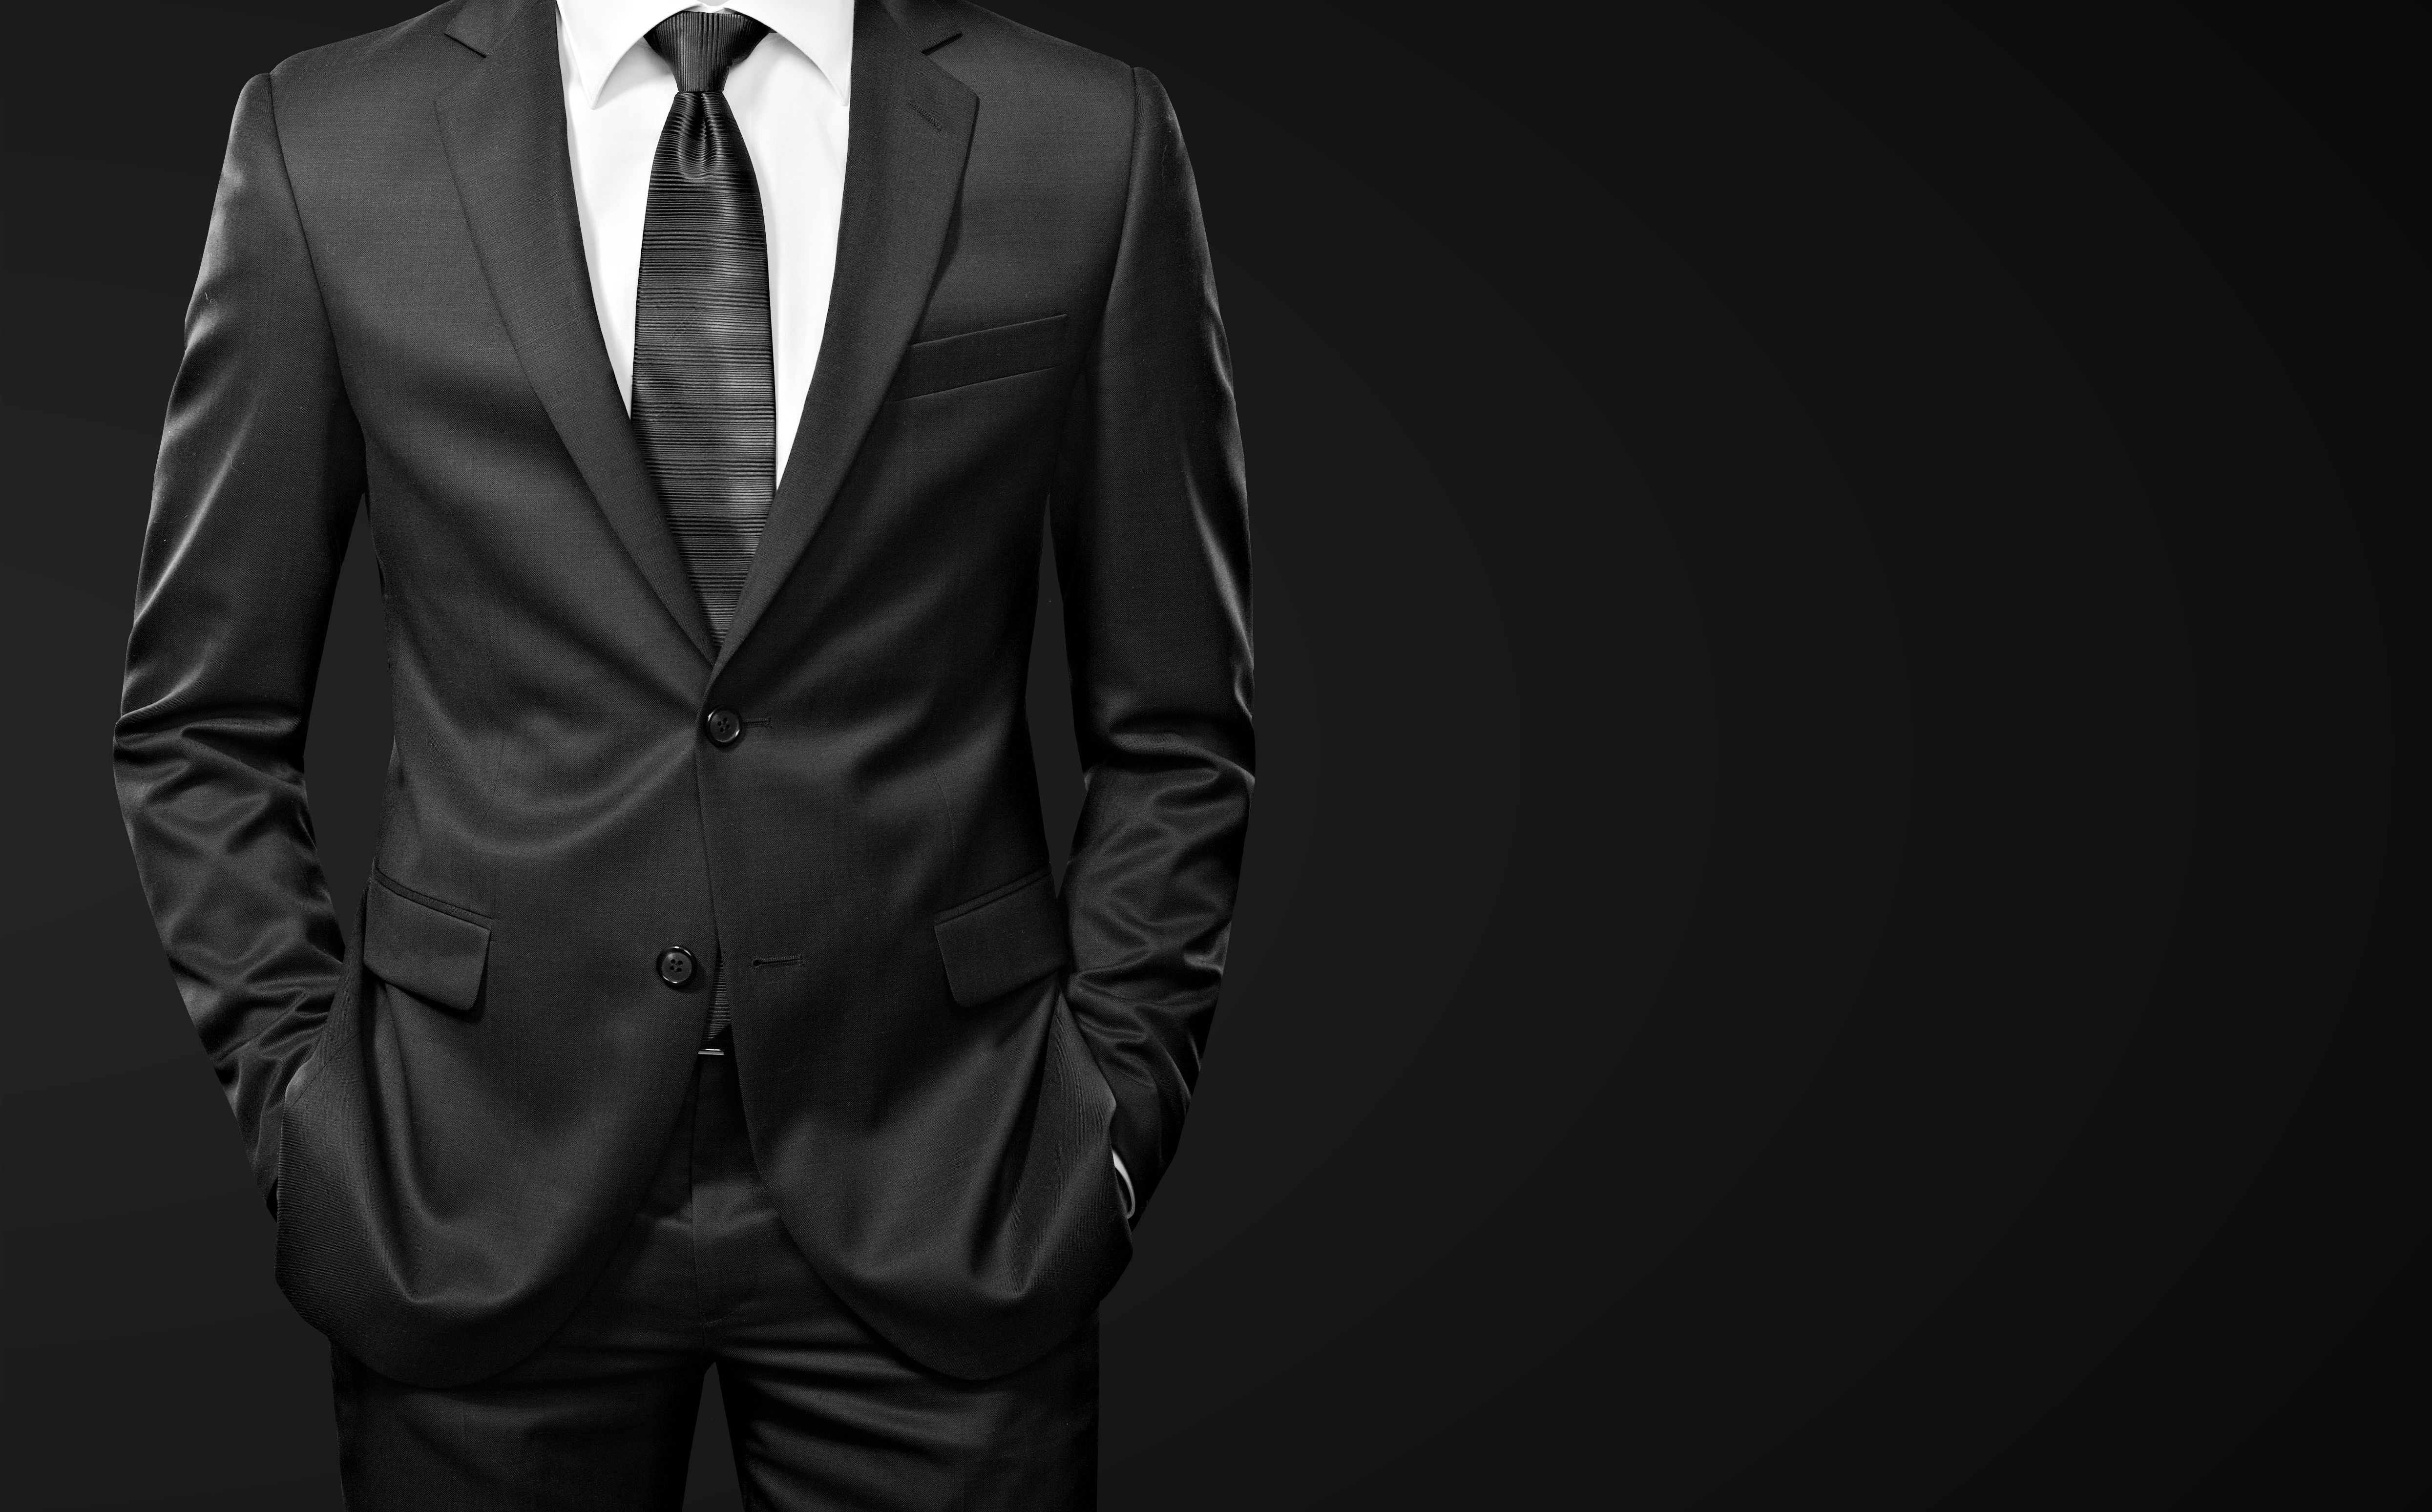 Wallpaper Man in Black Suit Jacket, Background - Download Free Image